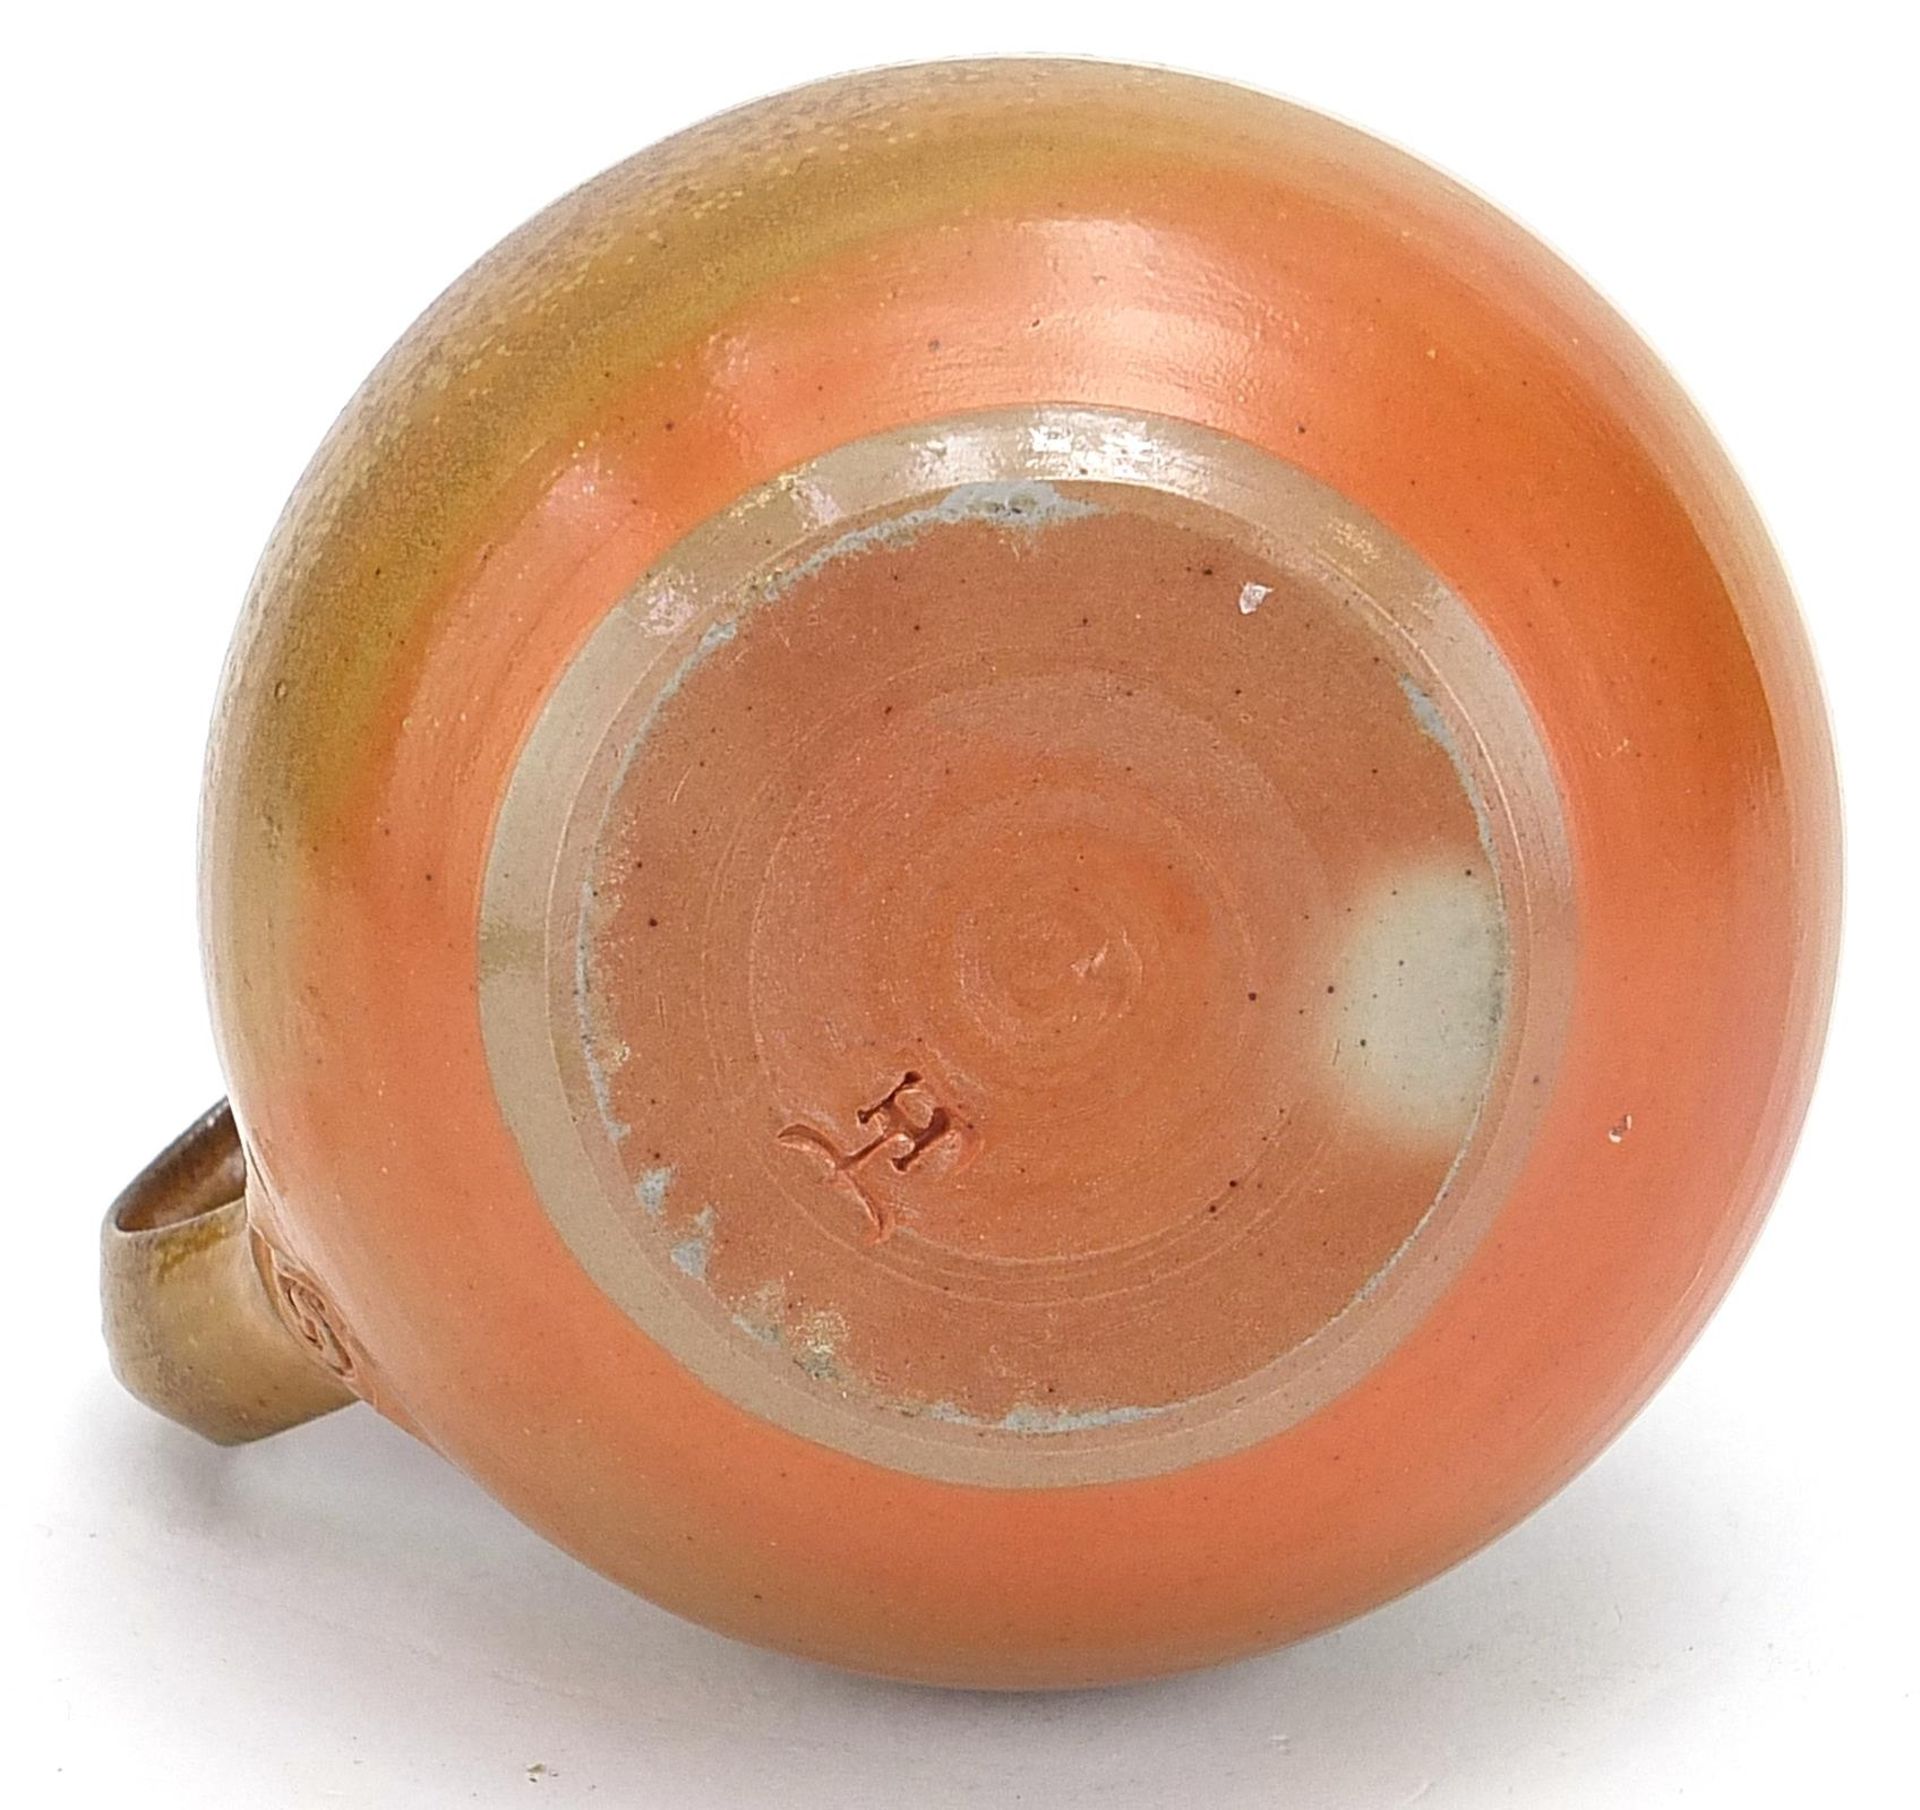 Guy Sydenham for Quay, studio pottery jug, impressed mark to the handle, 9.5cm high - Image 3 of 4